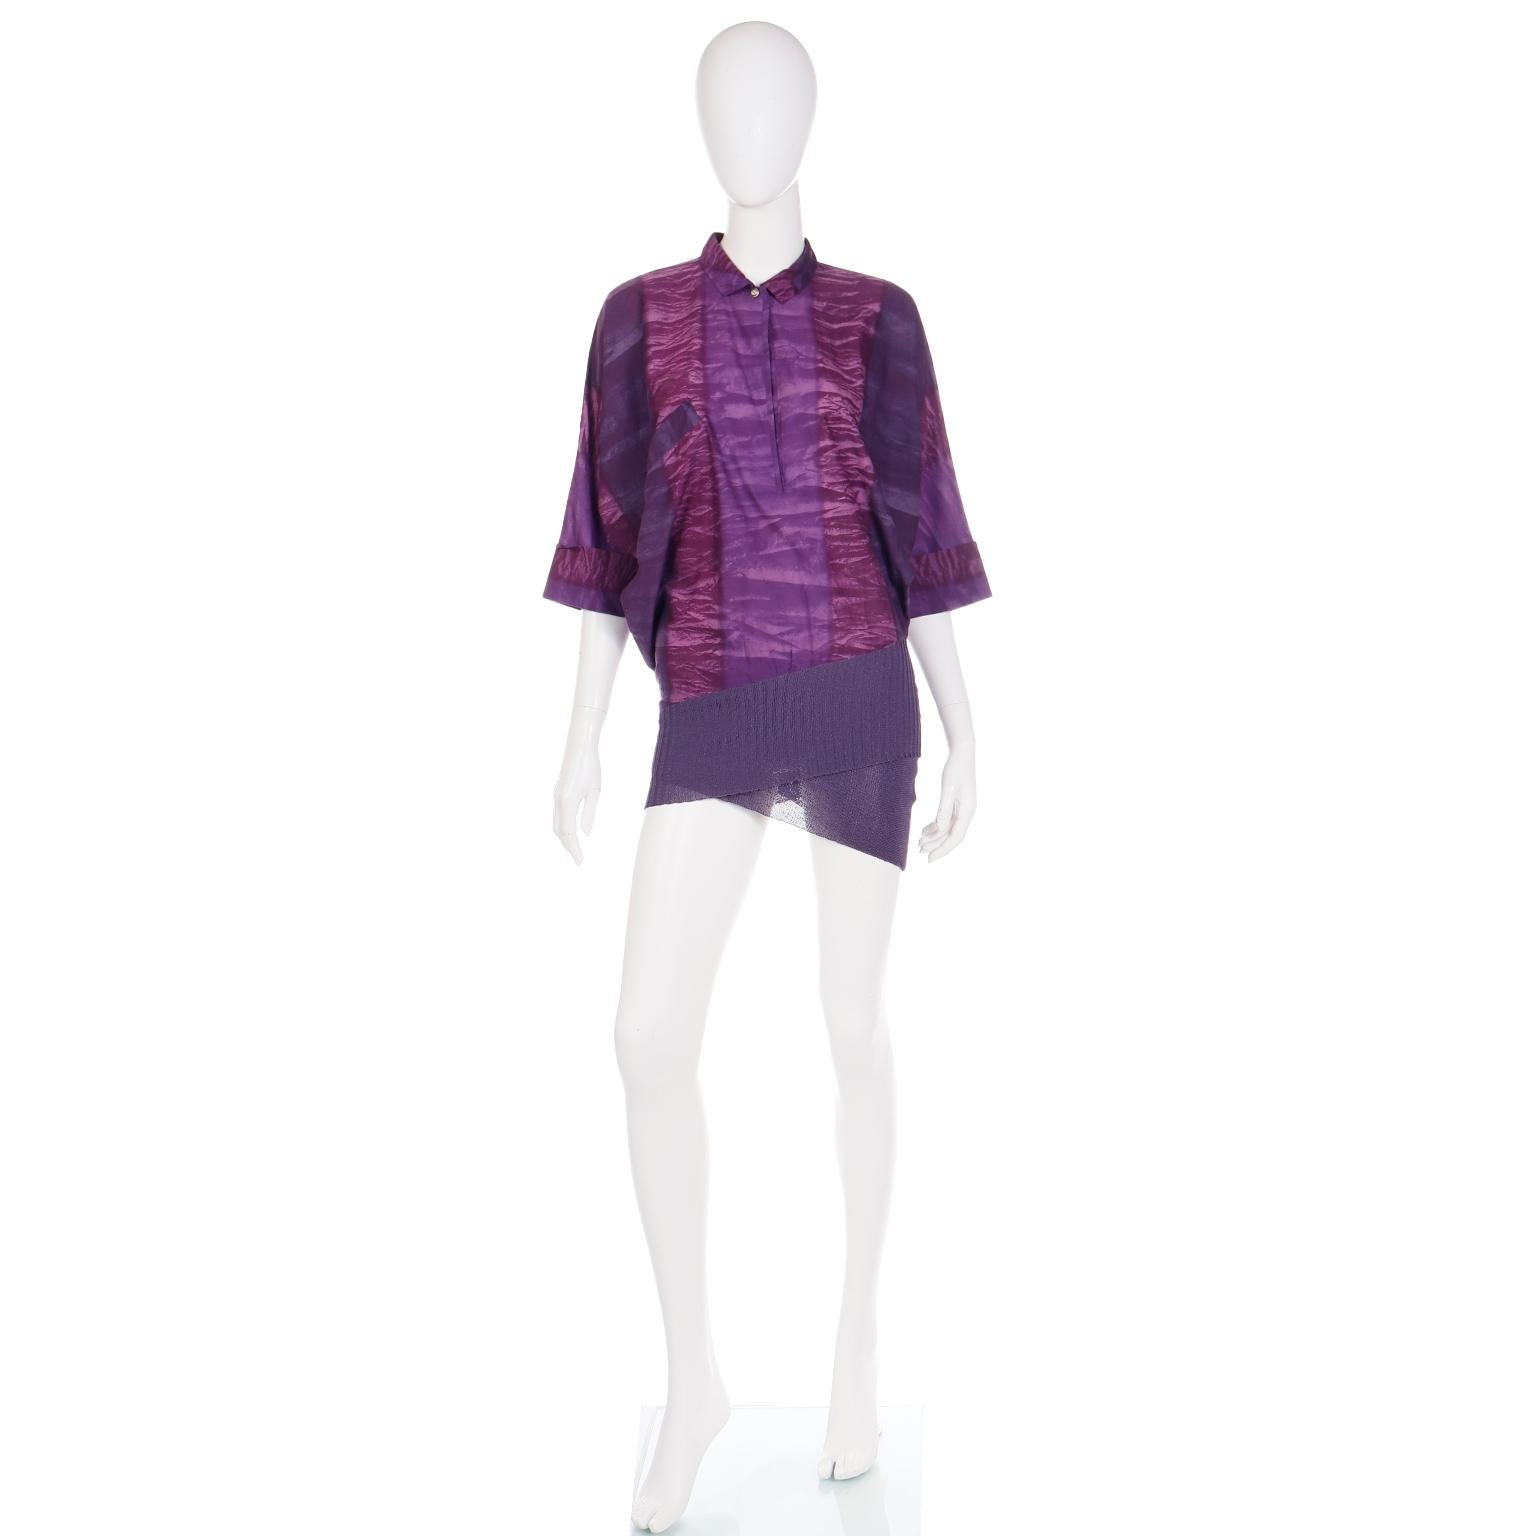 Gianni Versace 1980s Asymmetrical Top Purple Abstract Print Shirt w Knit Trim For Sale 2